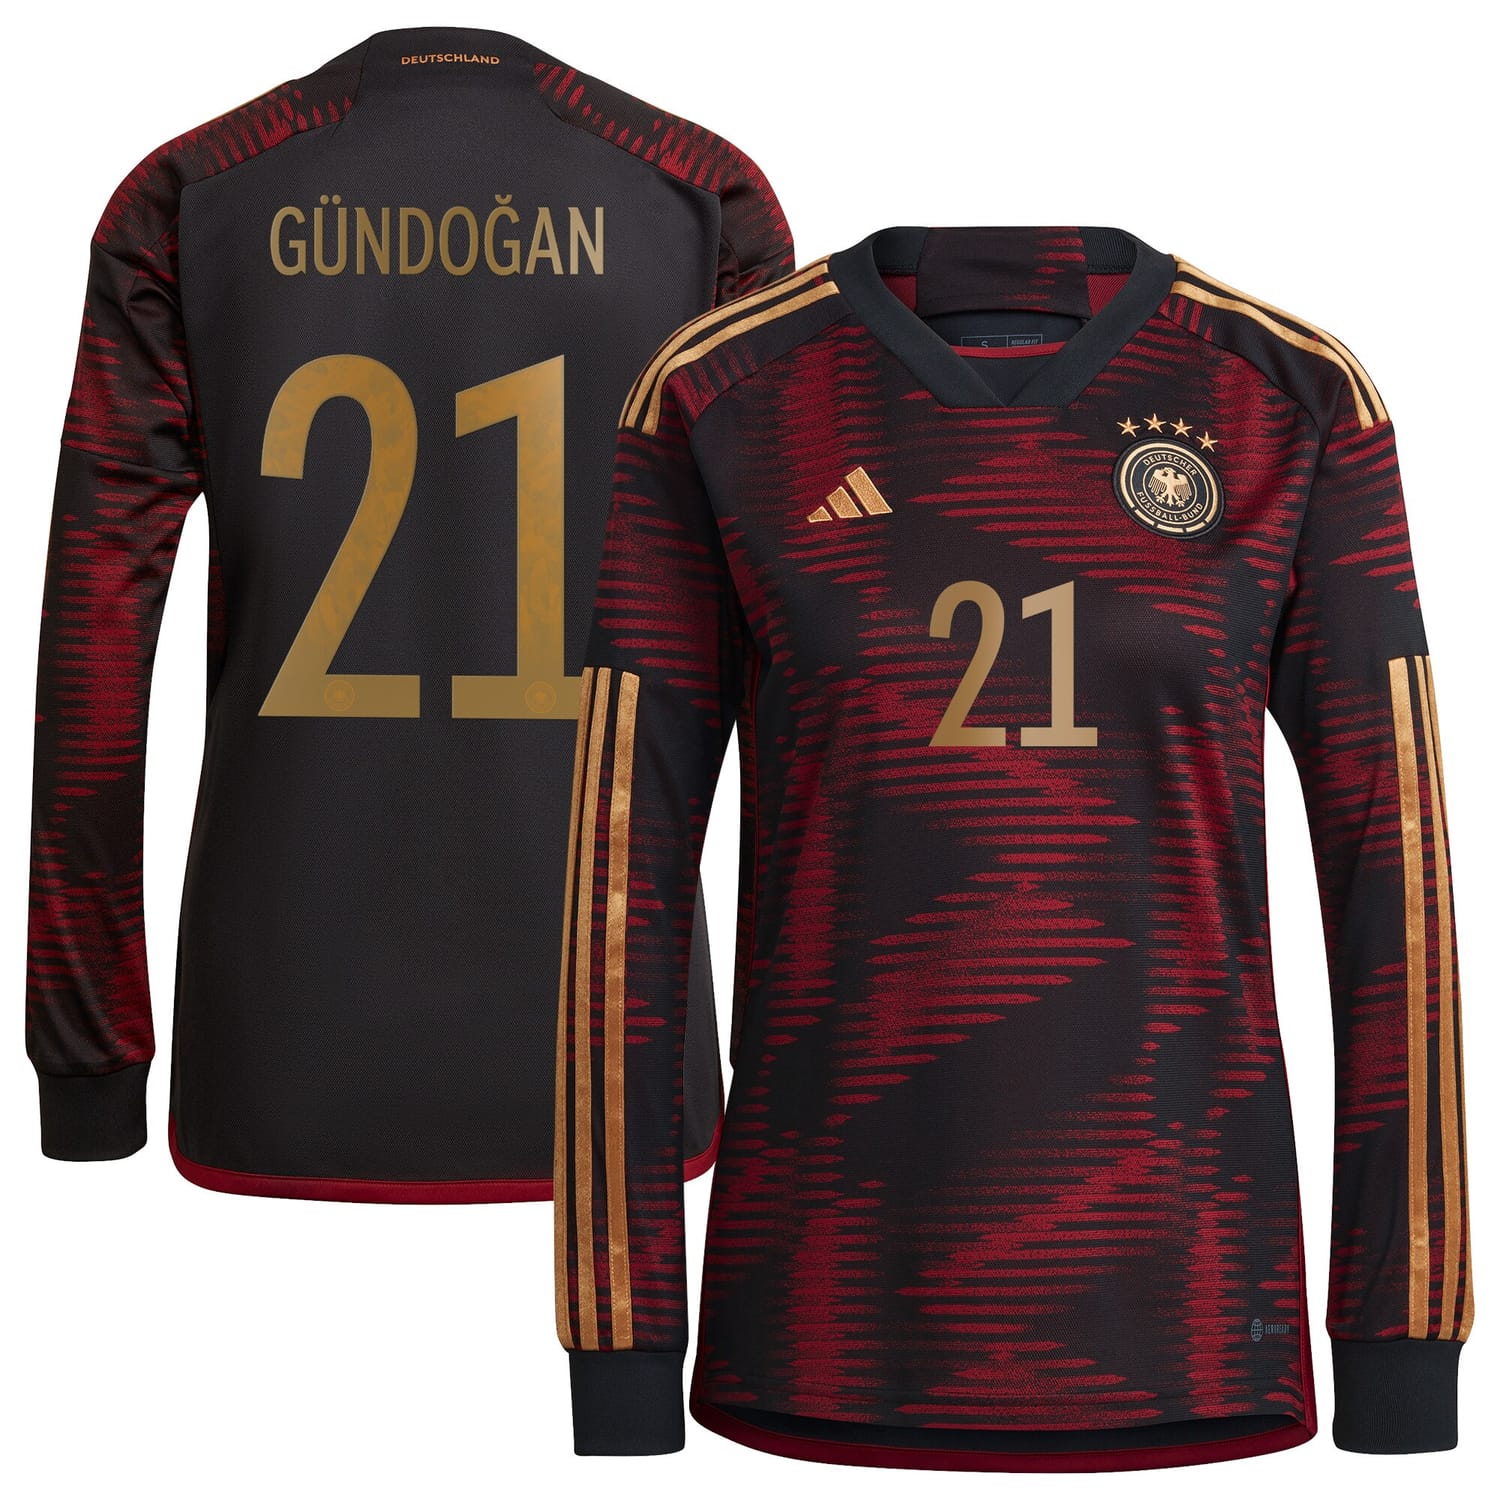 Germany National Team Away Jersey Shirt Long Sleeve player Ilkay Gündogan 21 printing for Women